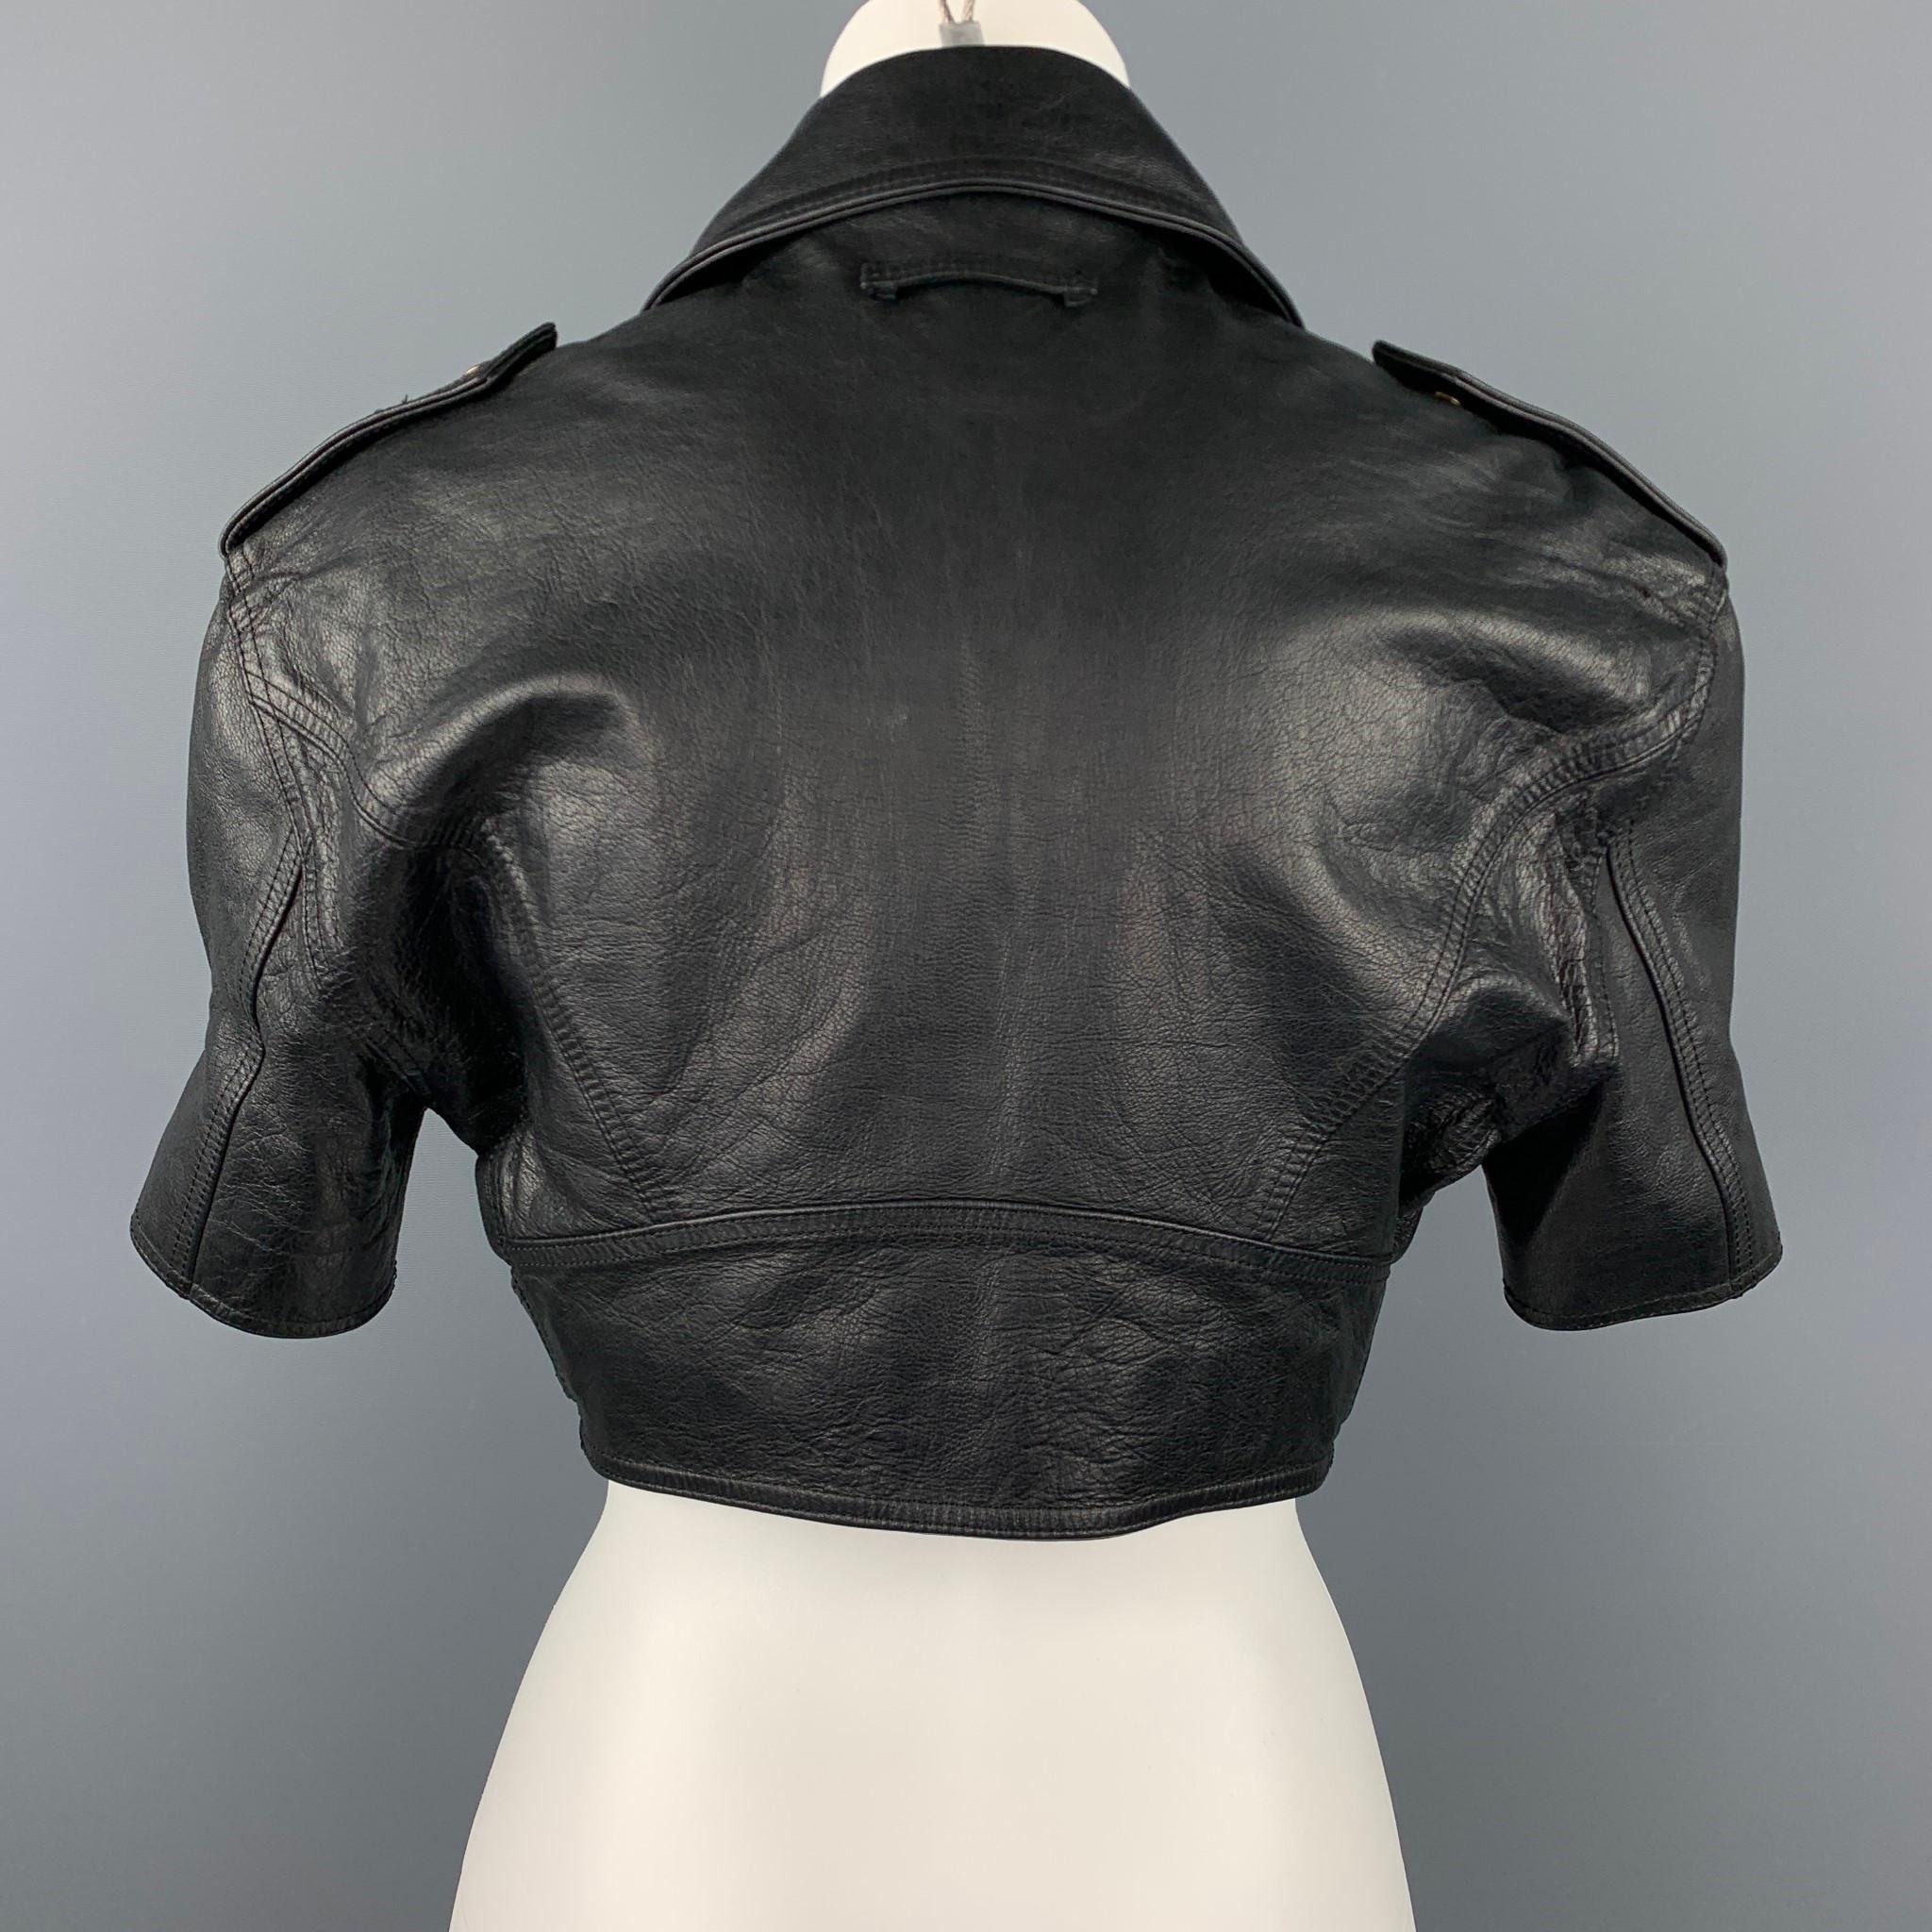 Women's GAULTIER2 by JEAN PAUL GAULTIER Size 8 Black Leather Cropped Motorcycle Jacket